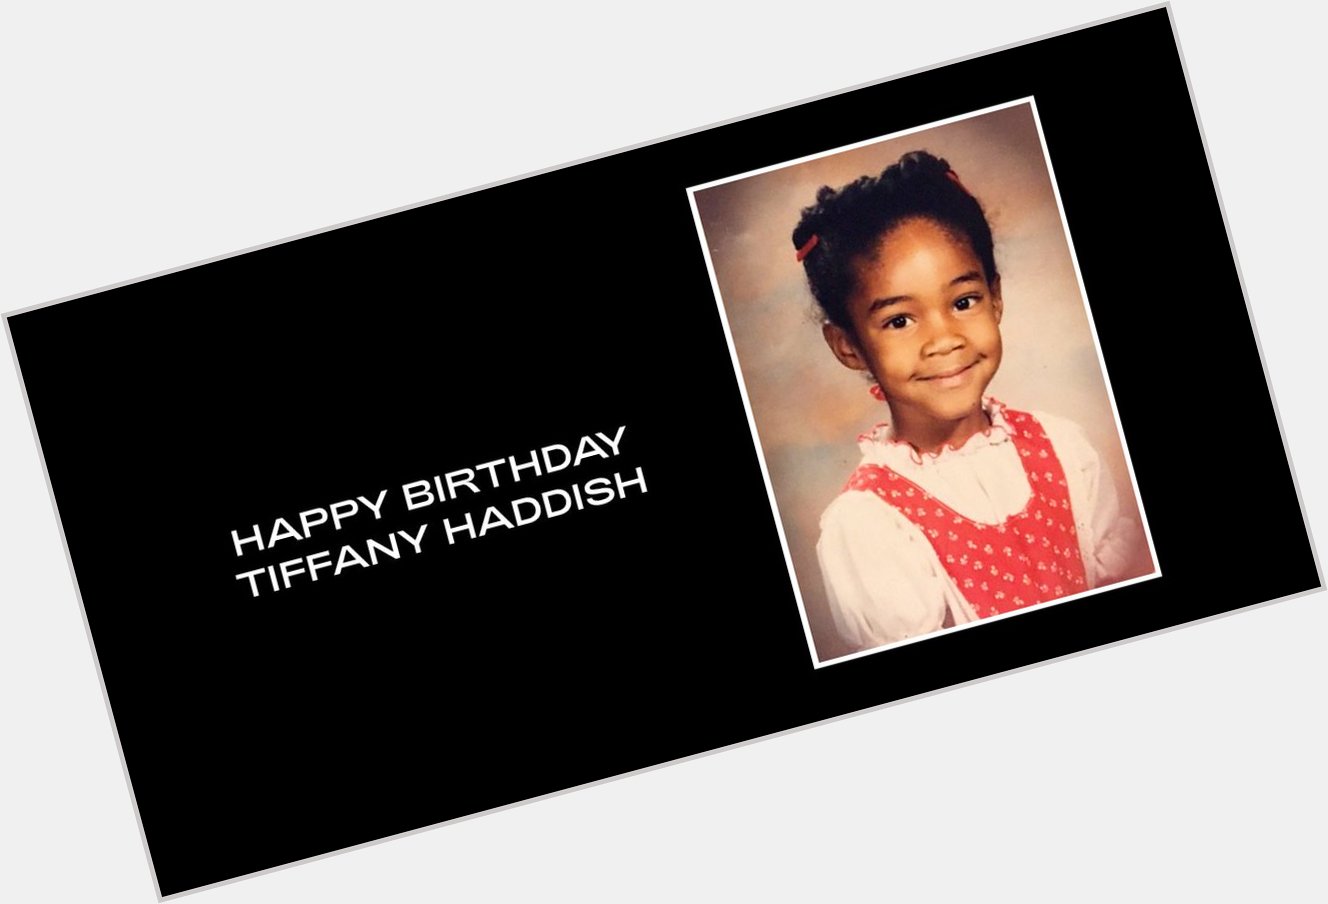  Happy Birthday Tiffany Haddish & Tyra Banks  